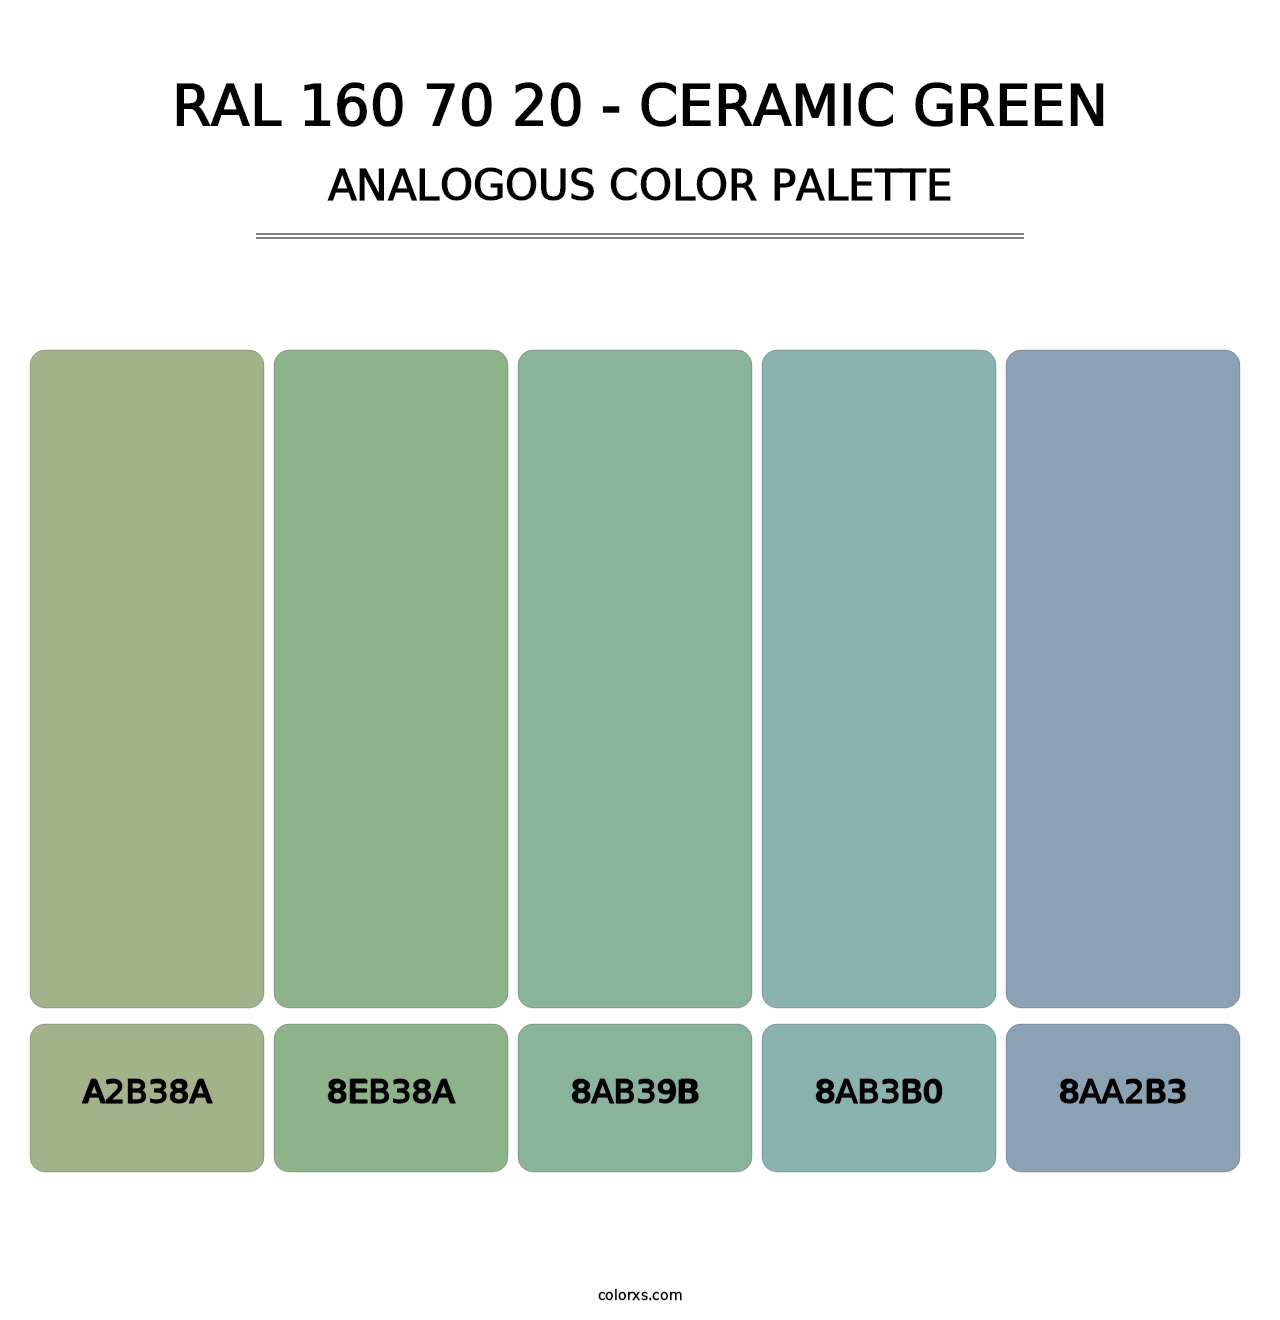 RAL 160 70 20 - Ceramic Green - Analogous Color Palette